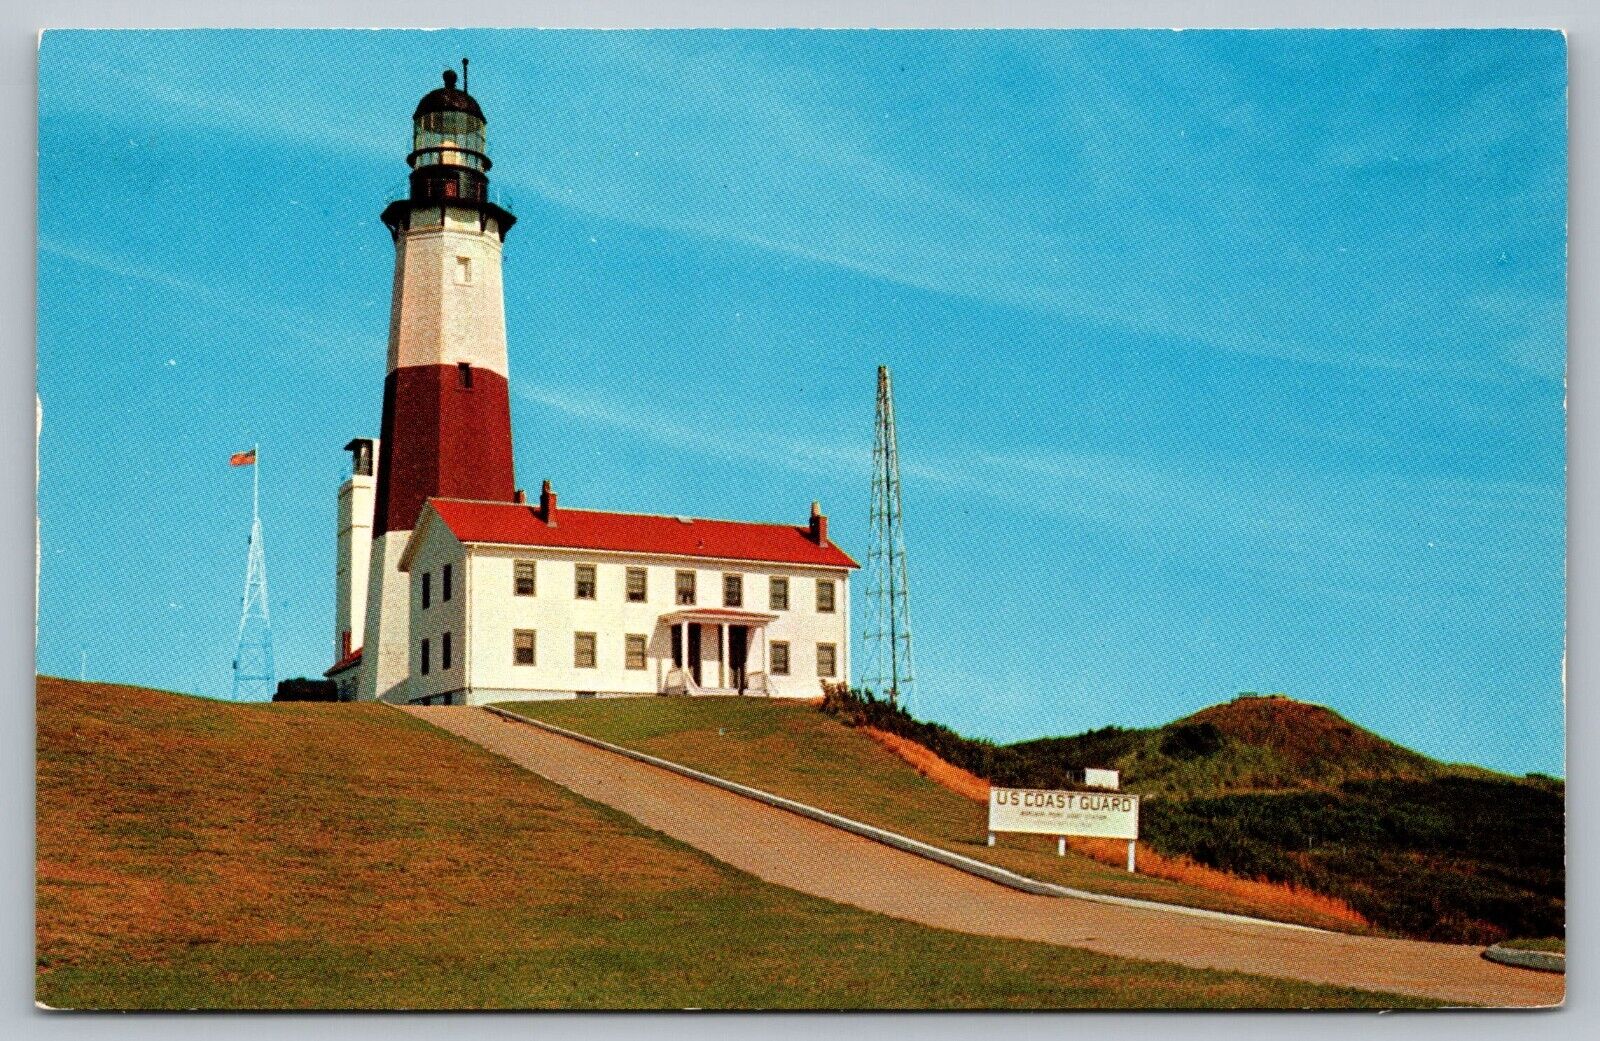 Postcard Montauk Point Lighthouse Long Island The End US Coast Guard Station 